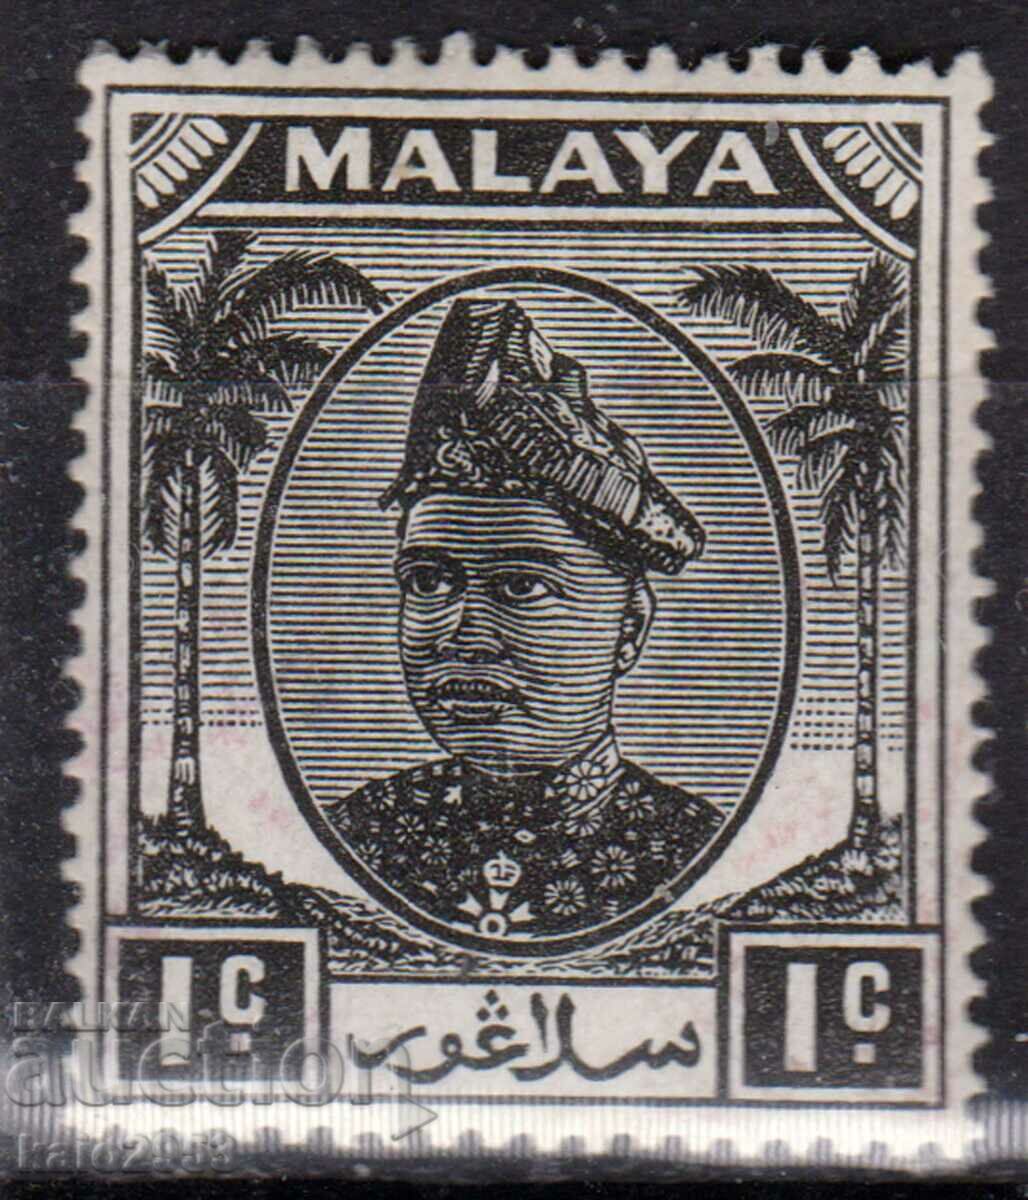 GB/MalayaSelangor-1949-Ιδιώτης σουλτάνος Hisamuddin Alam Shah,MLH